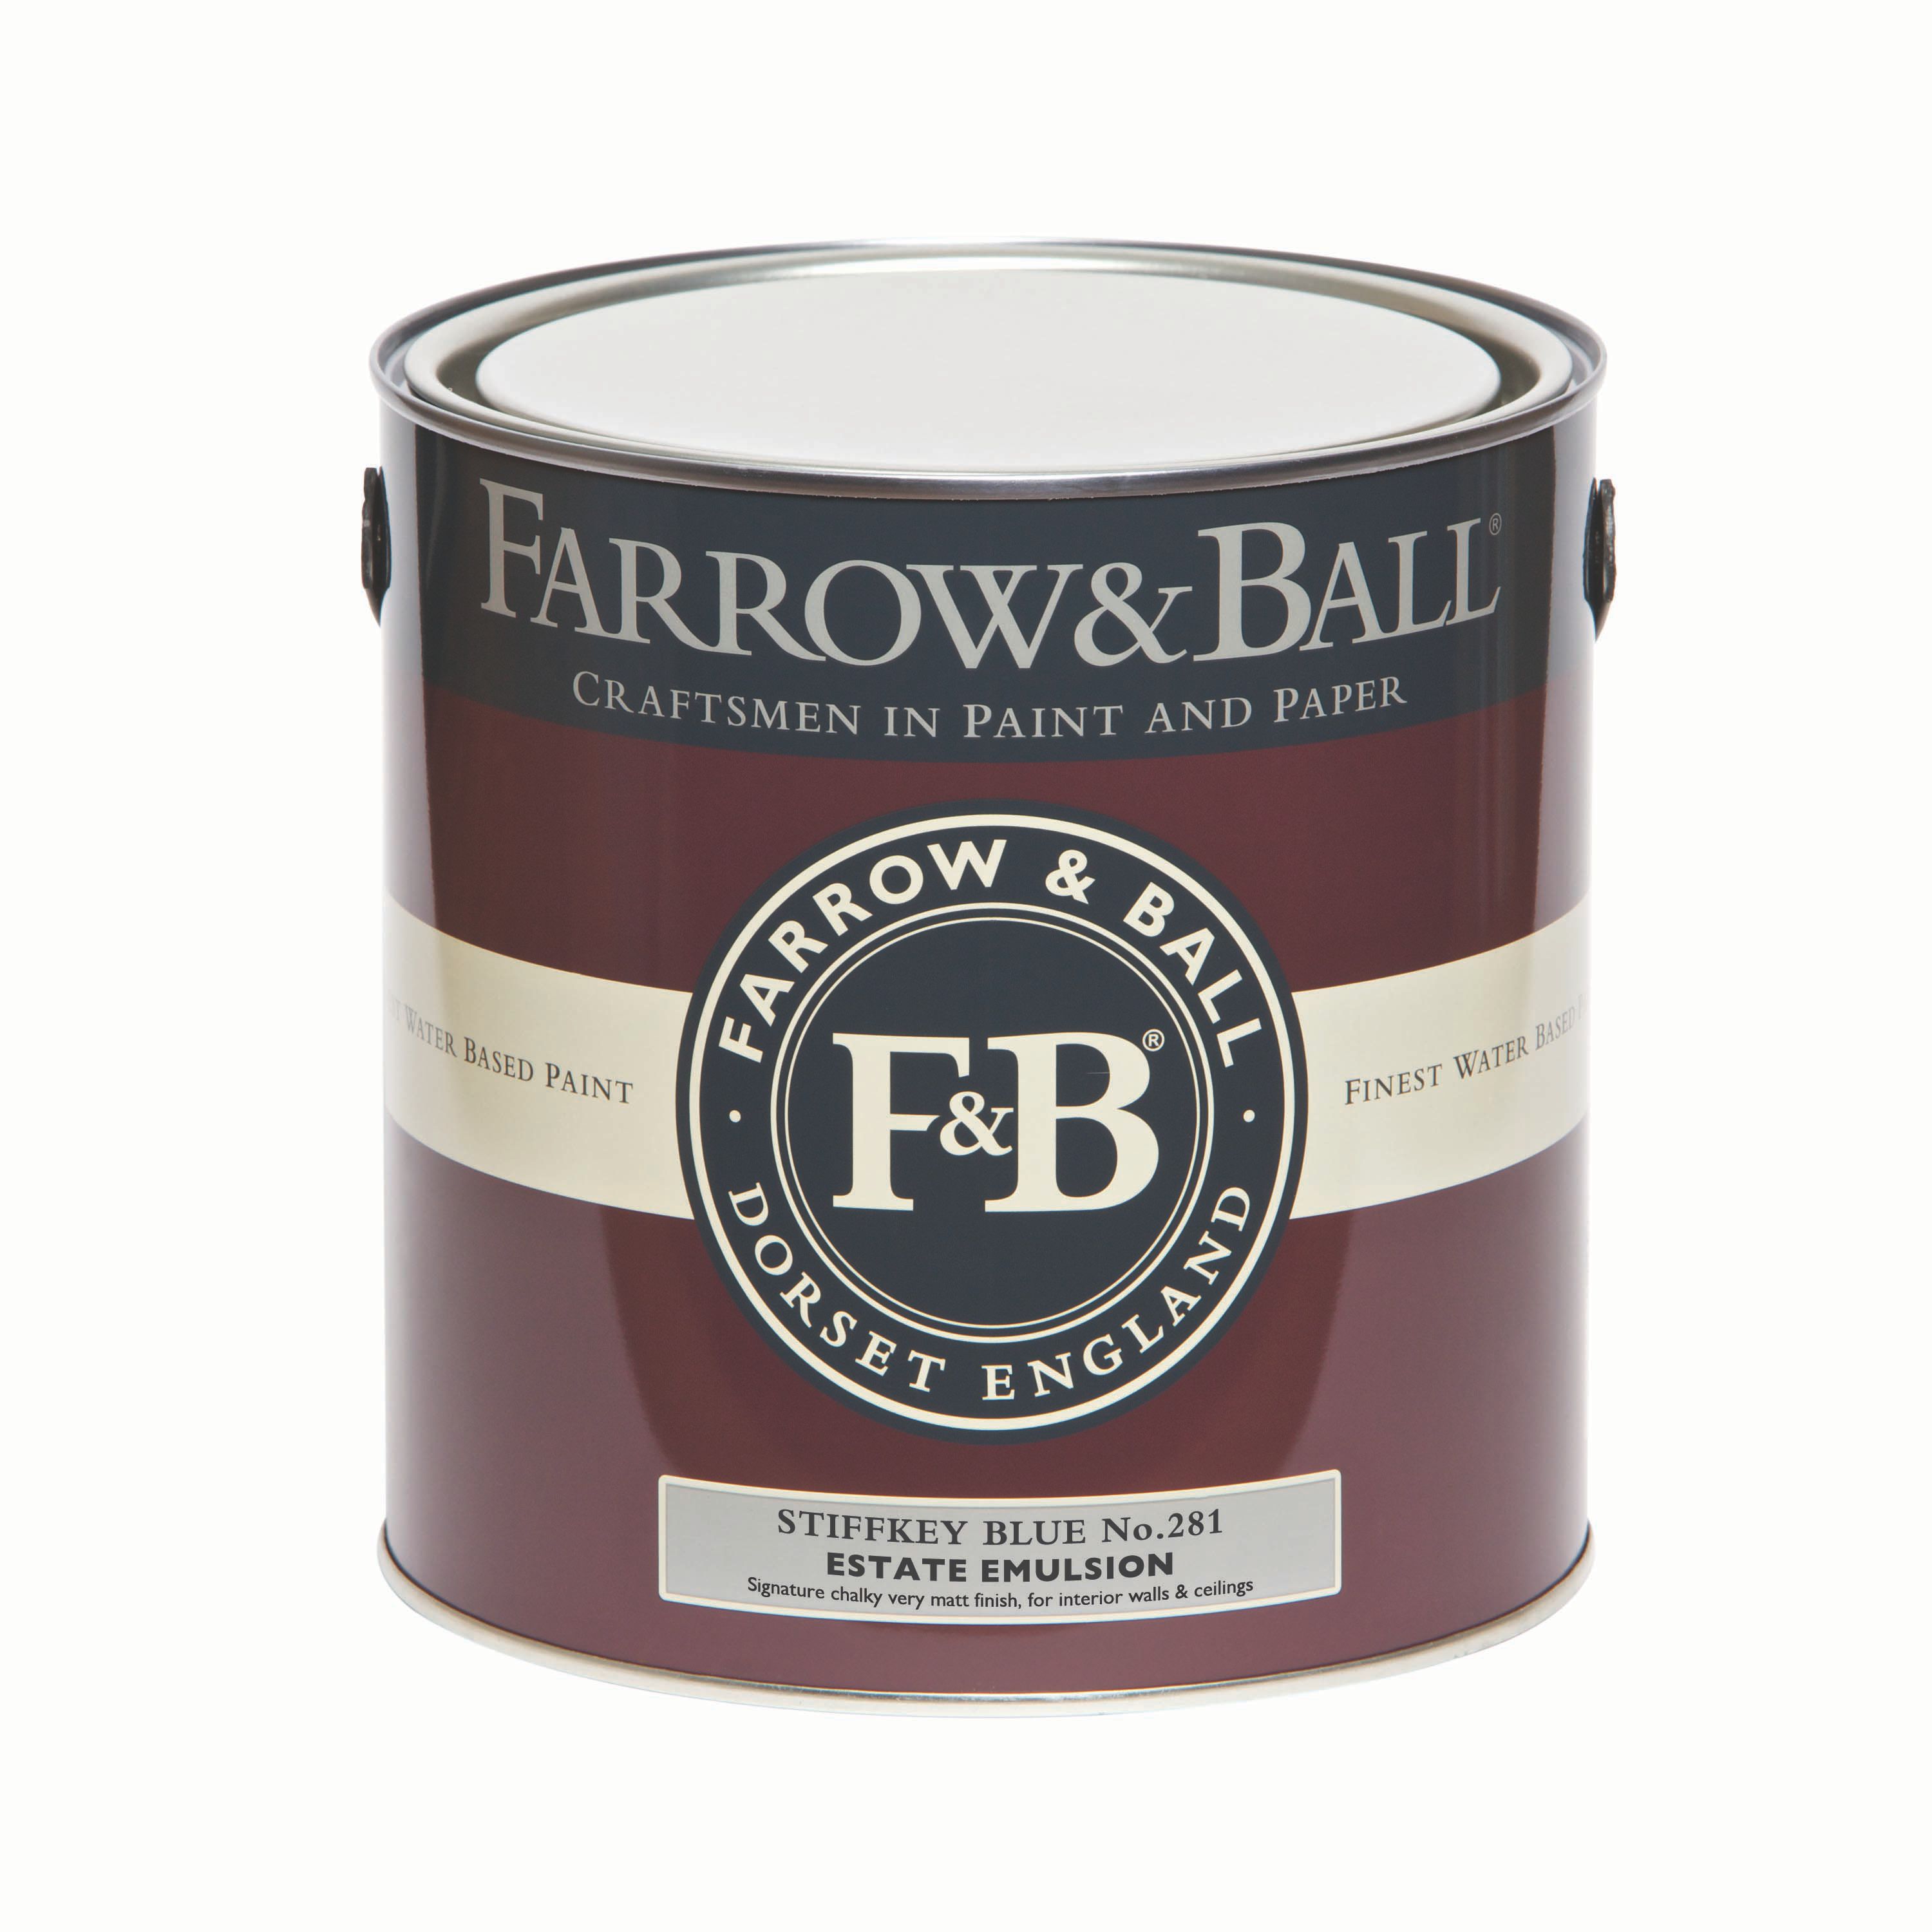 Farrow & Ball Estate Stiffkey blue No.281 Matt Emulsion paint, 2.5L